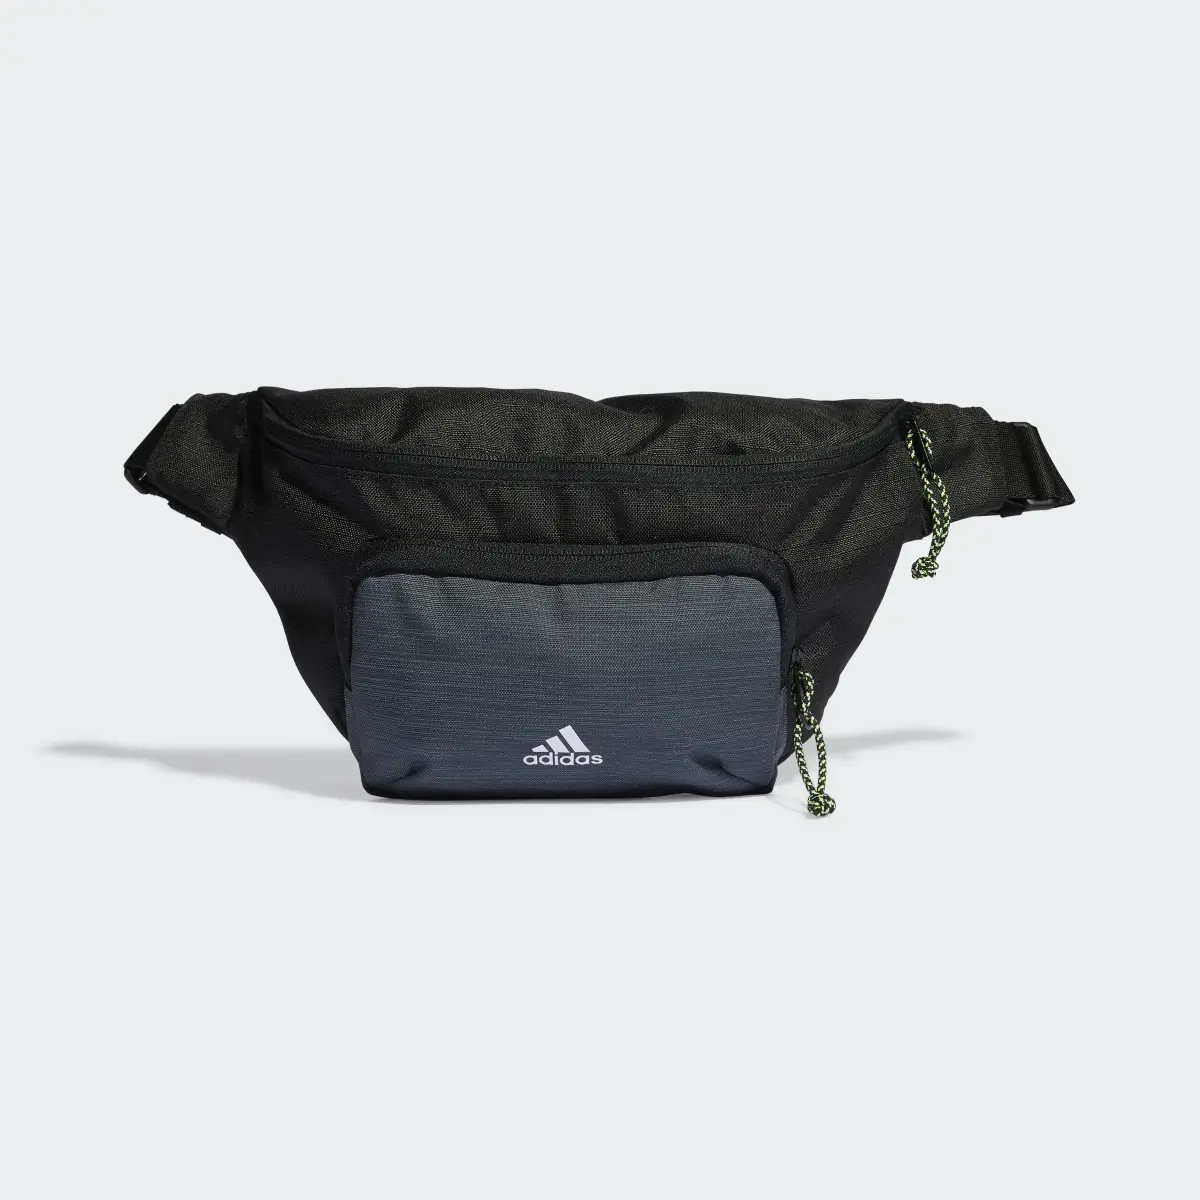 Adidas X_PLR Bum Bag. 2